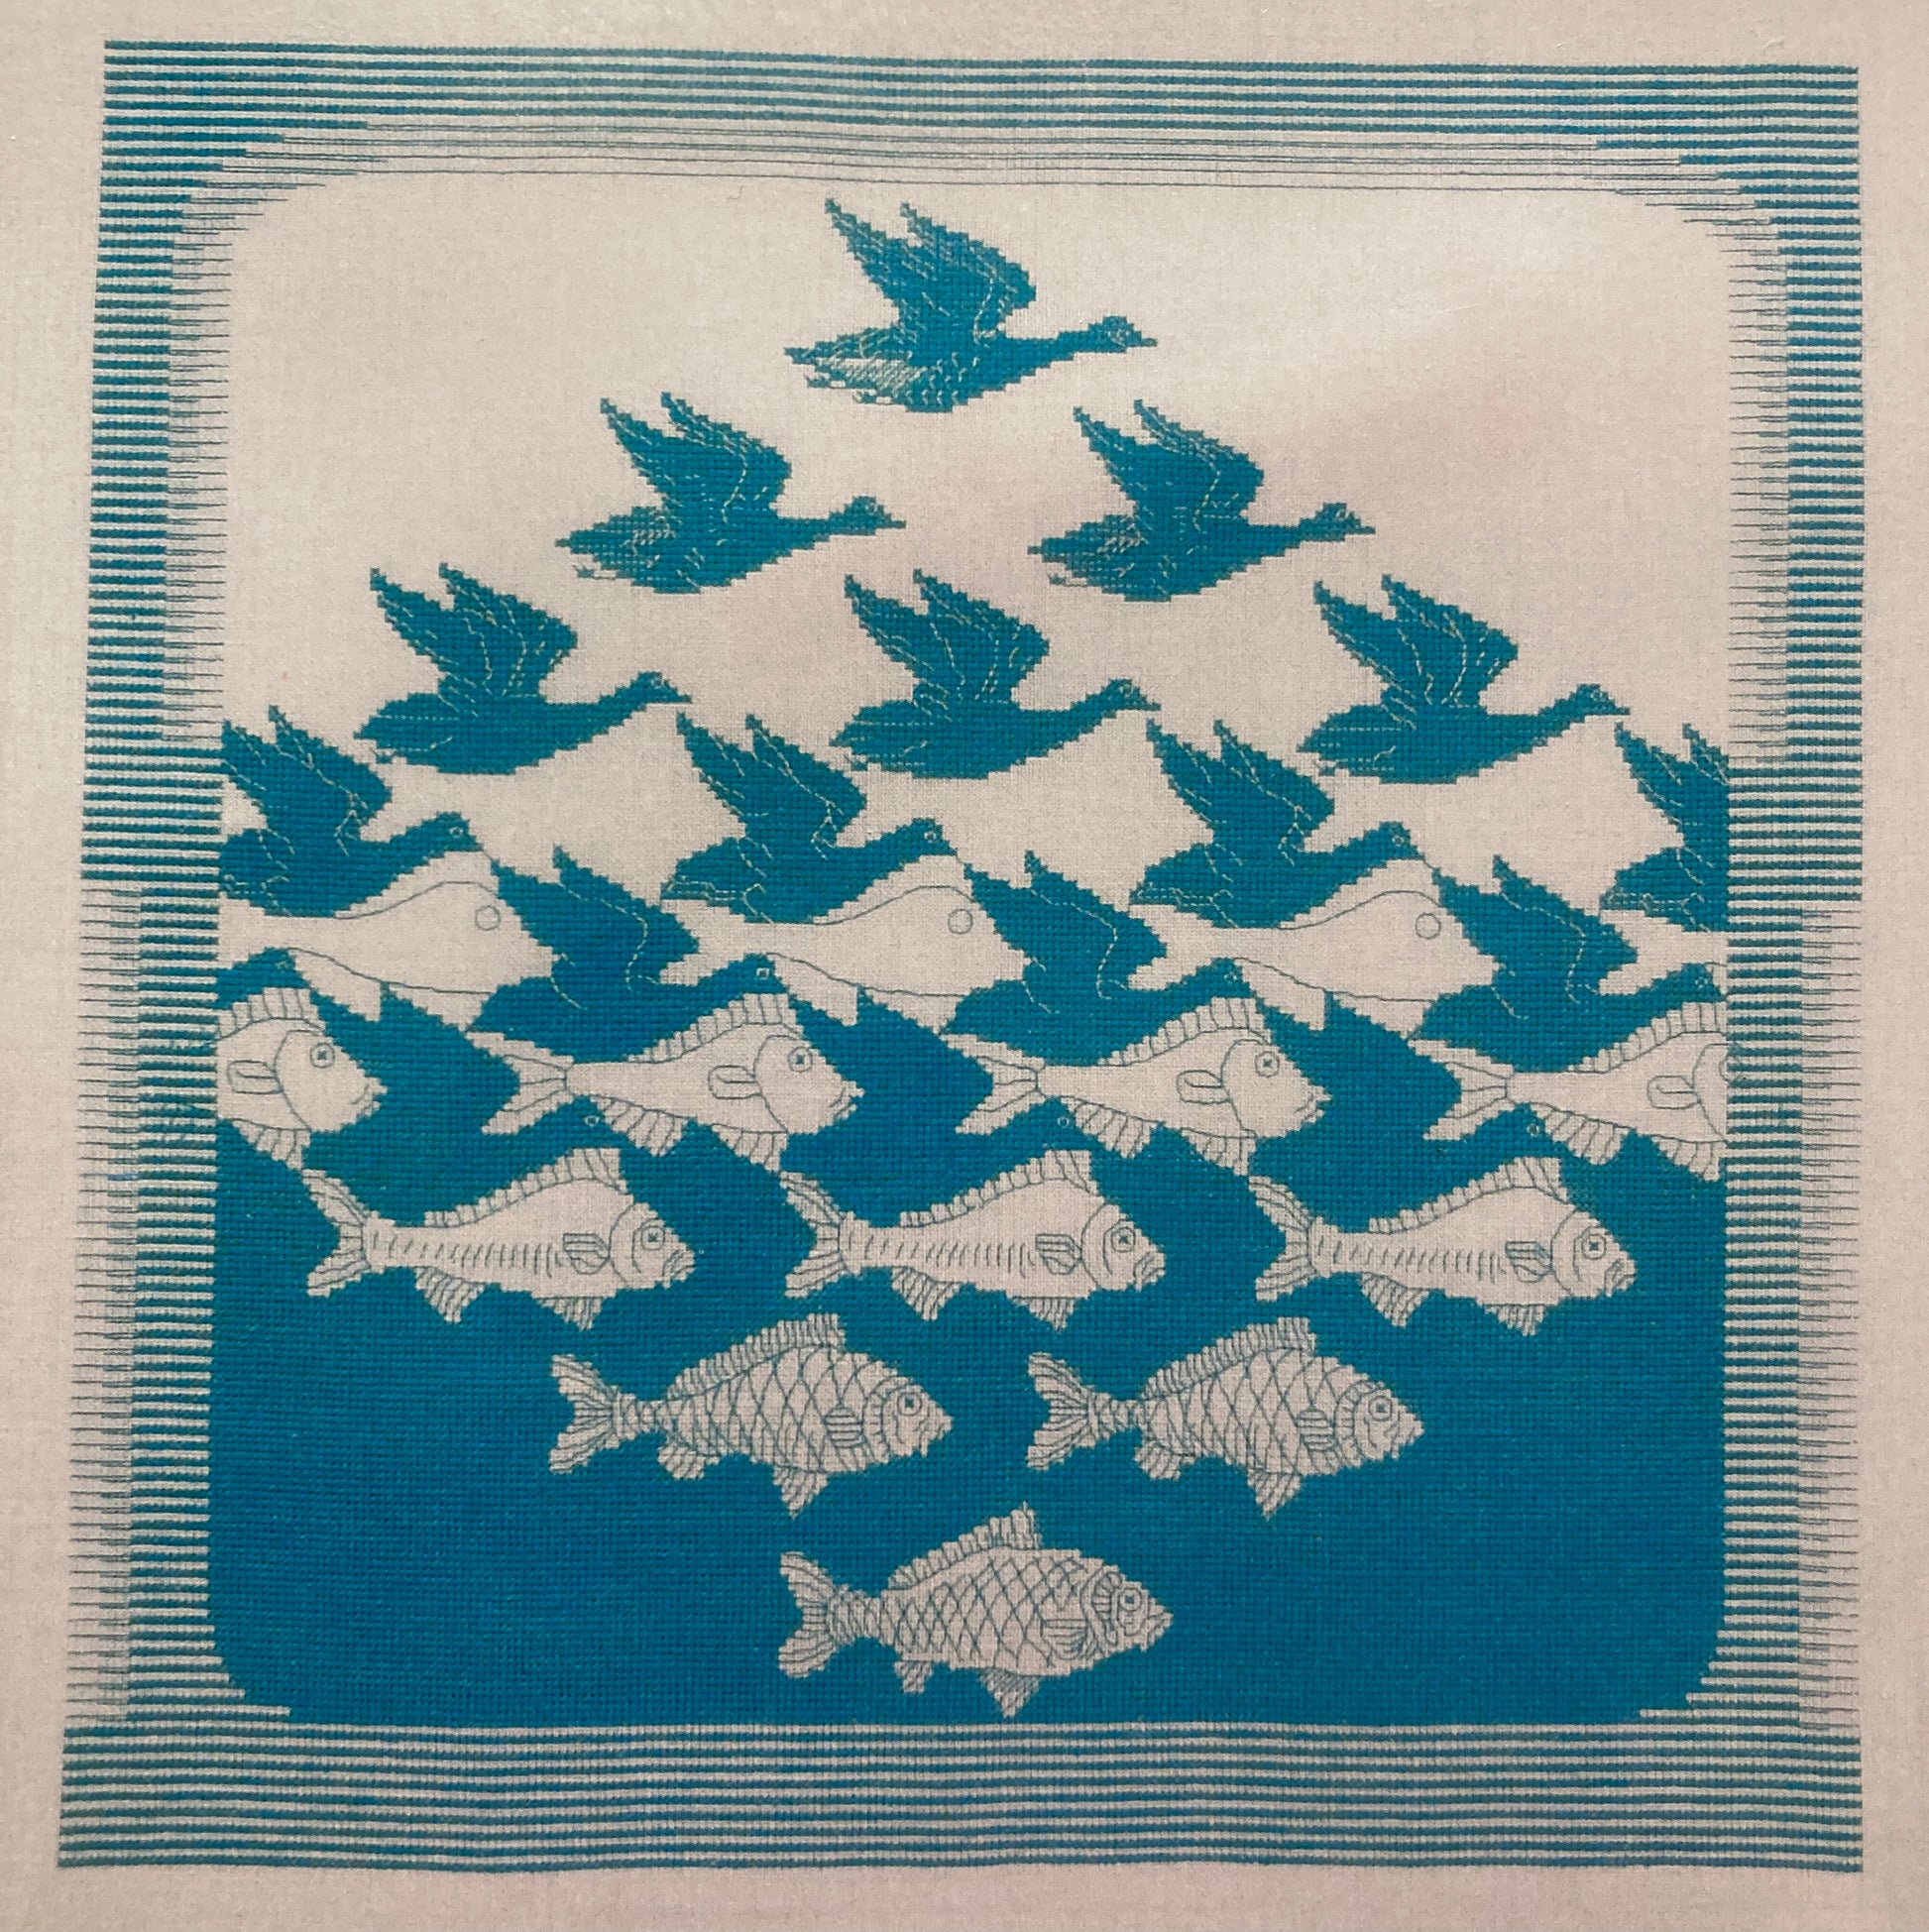 Bird-fish-permin-70-5343-blue.jpg